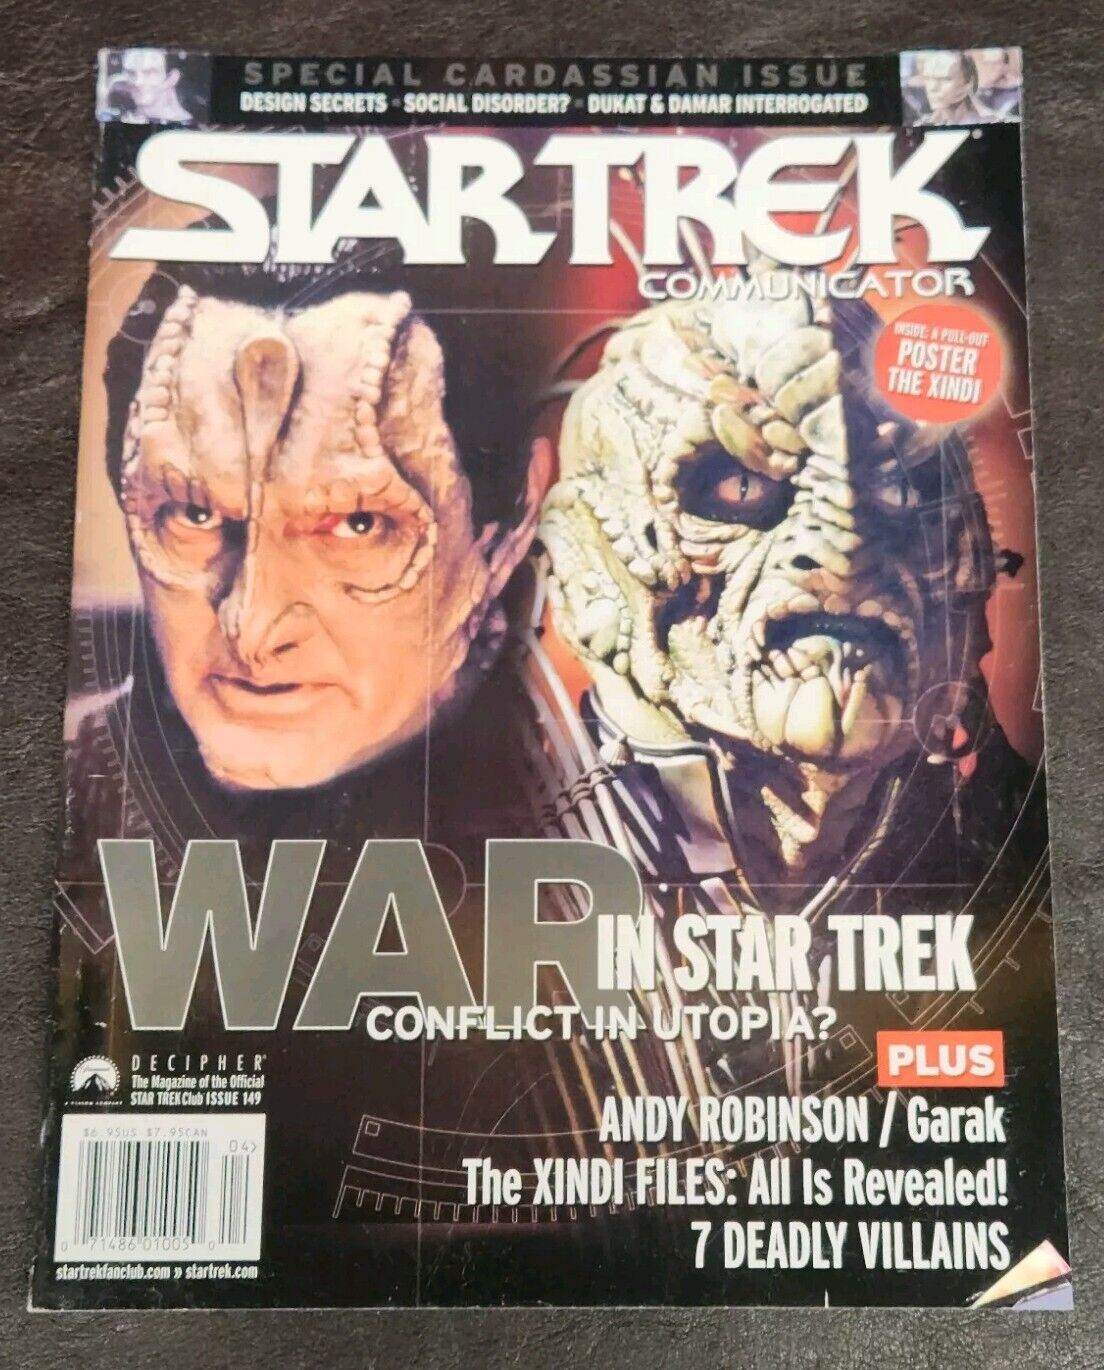 Star Trek Communicator #149, 2004, Deep Space Nine/Garak/Xindi, W/Poster, VG+